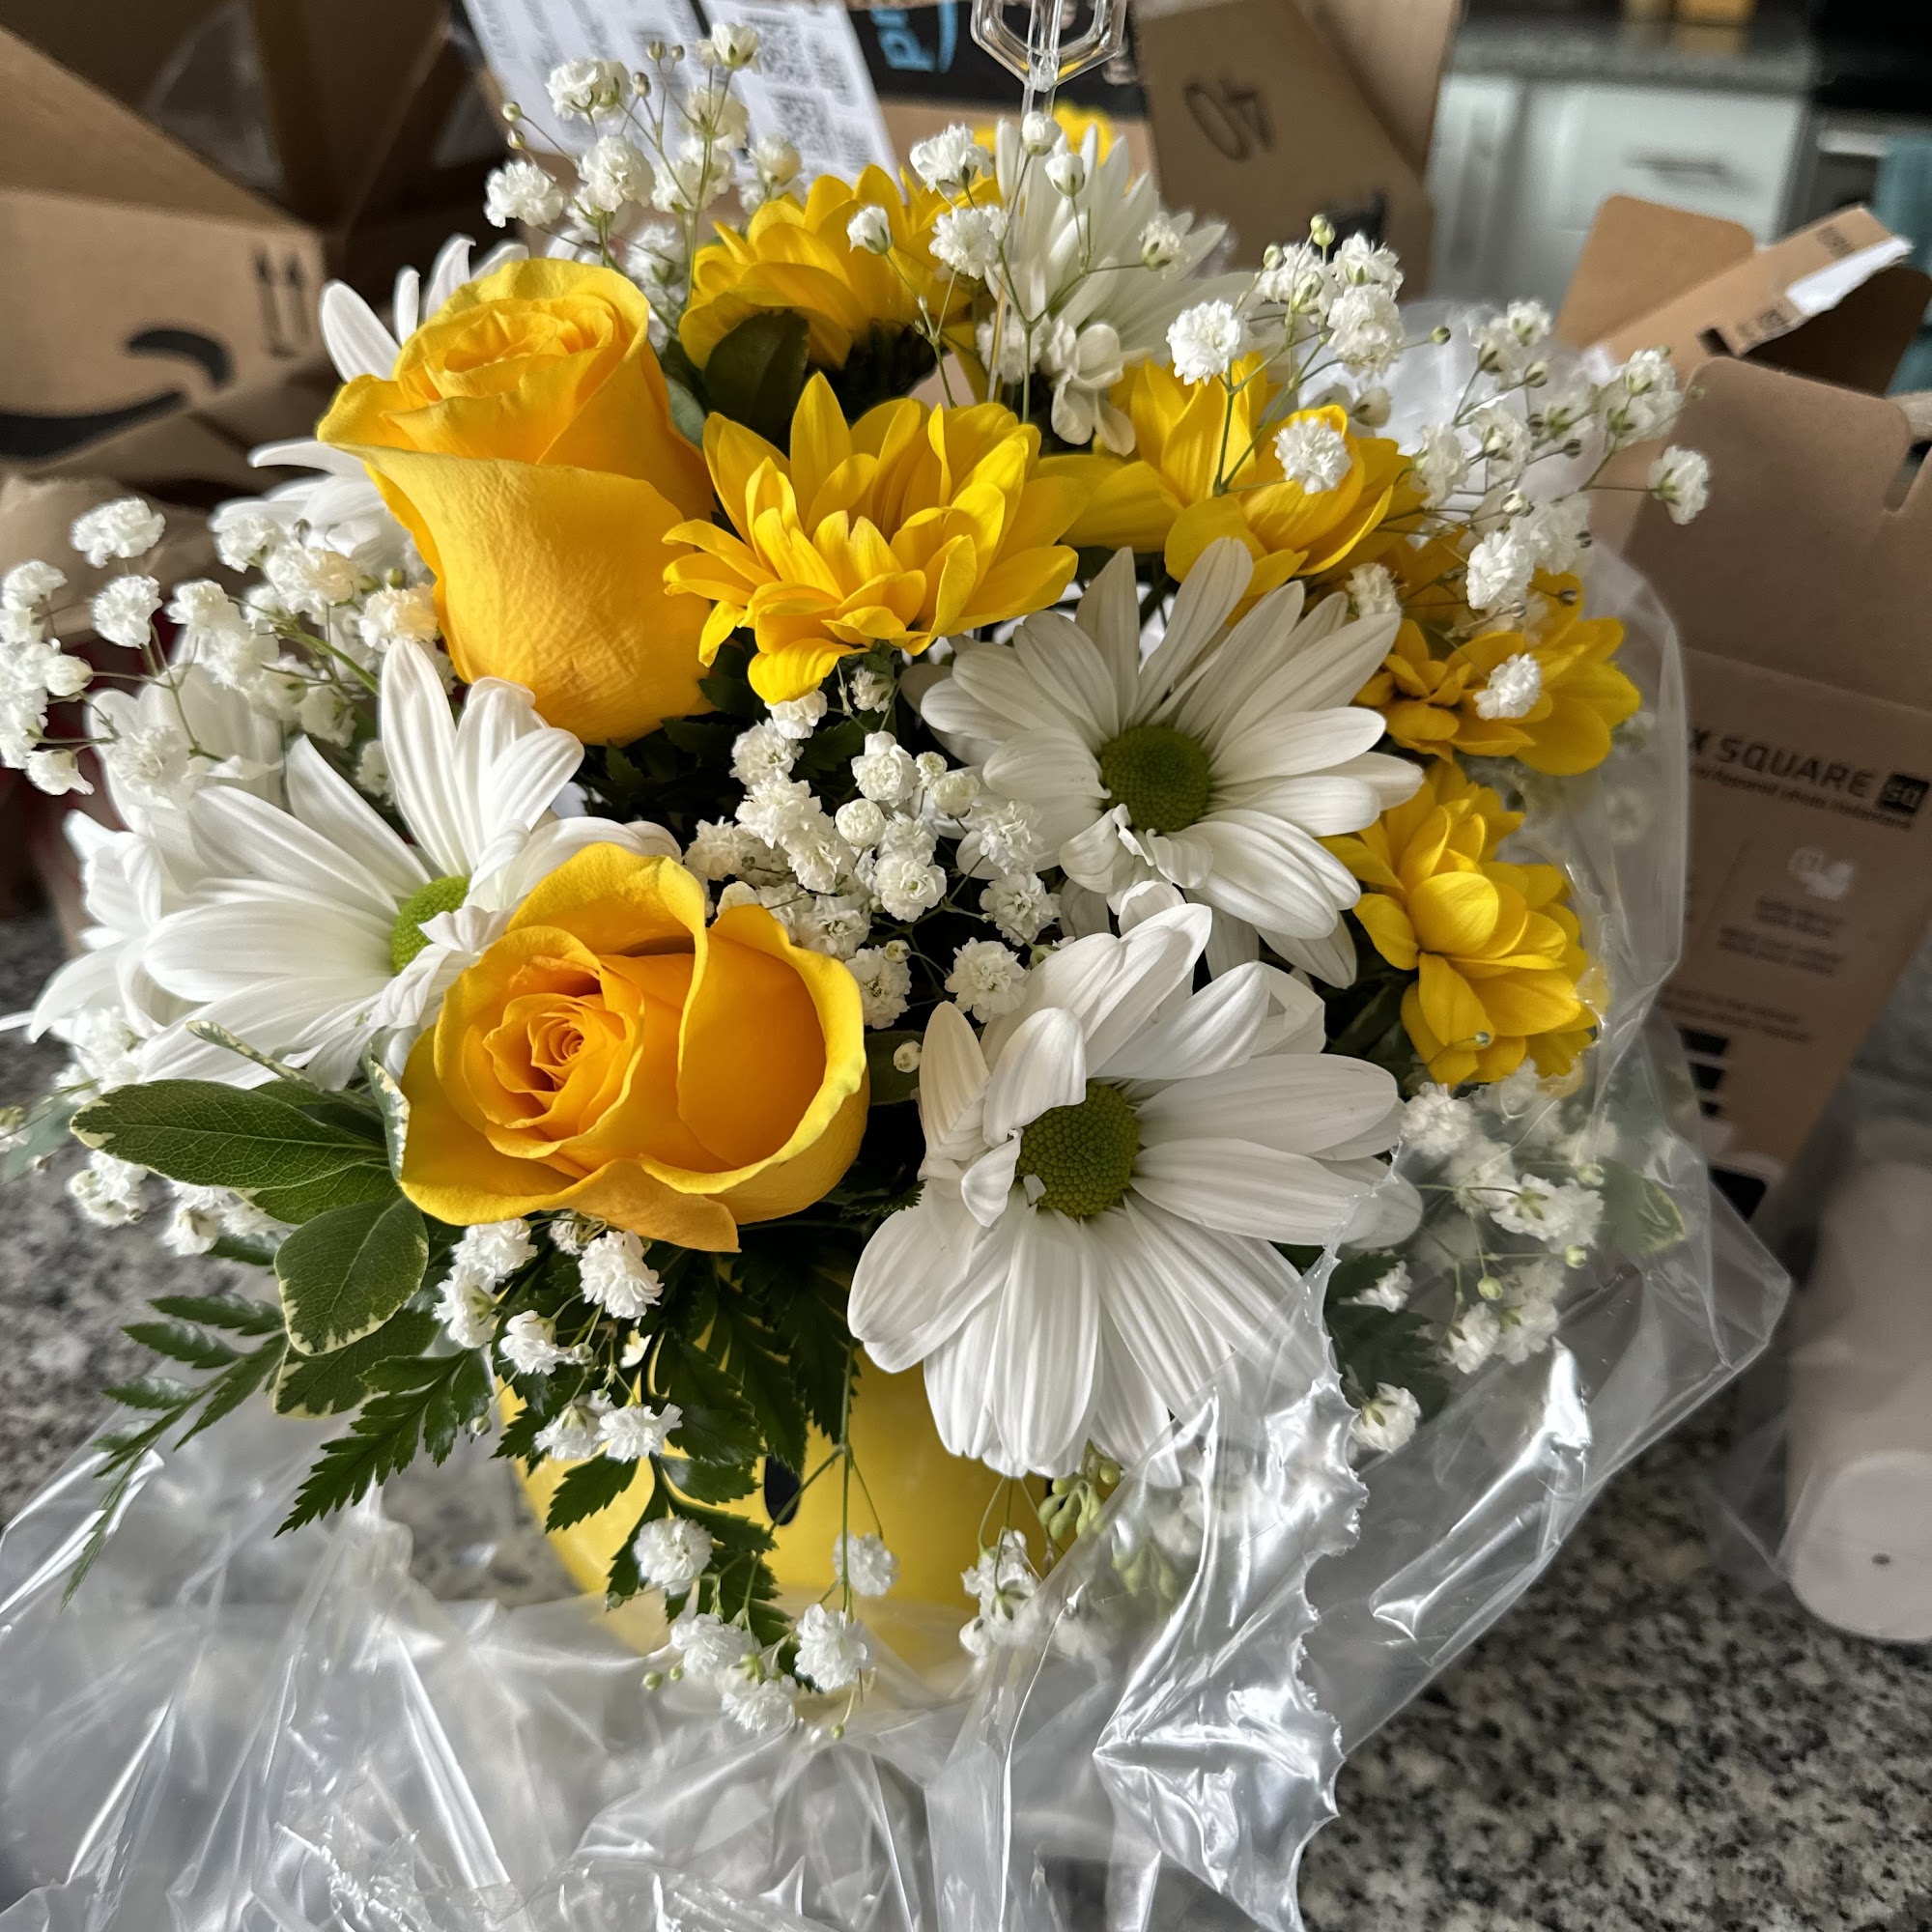 Darla's Flowers & Gifts